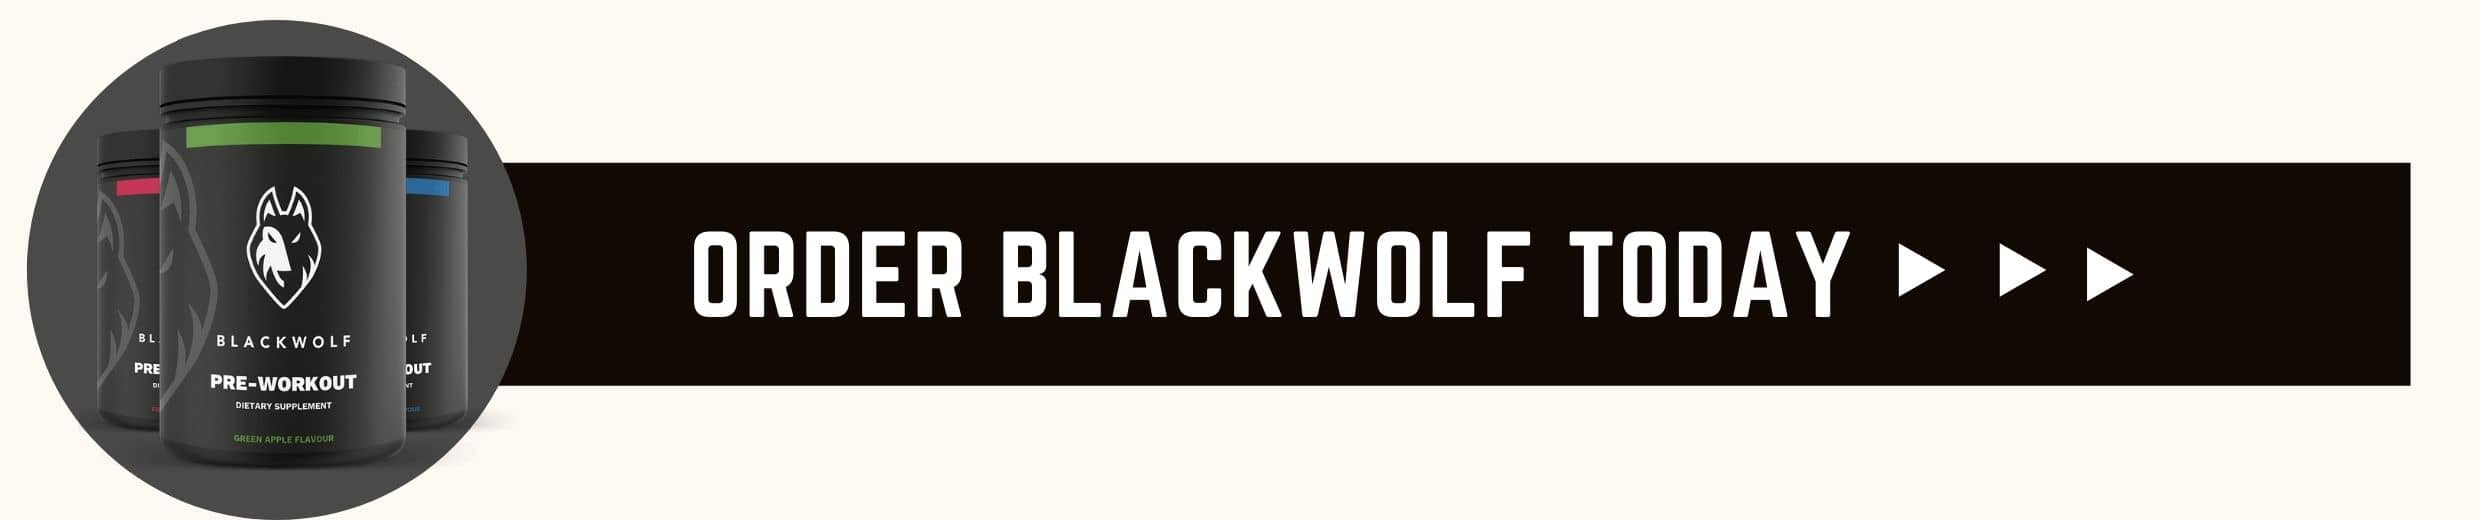 Order Blackwolf